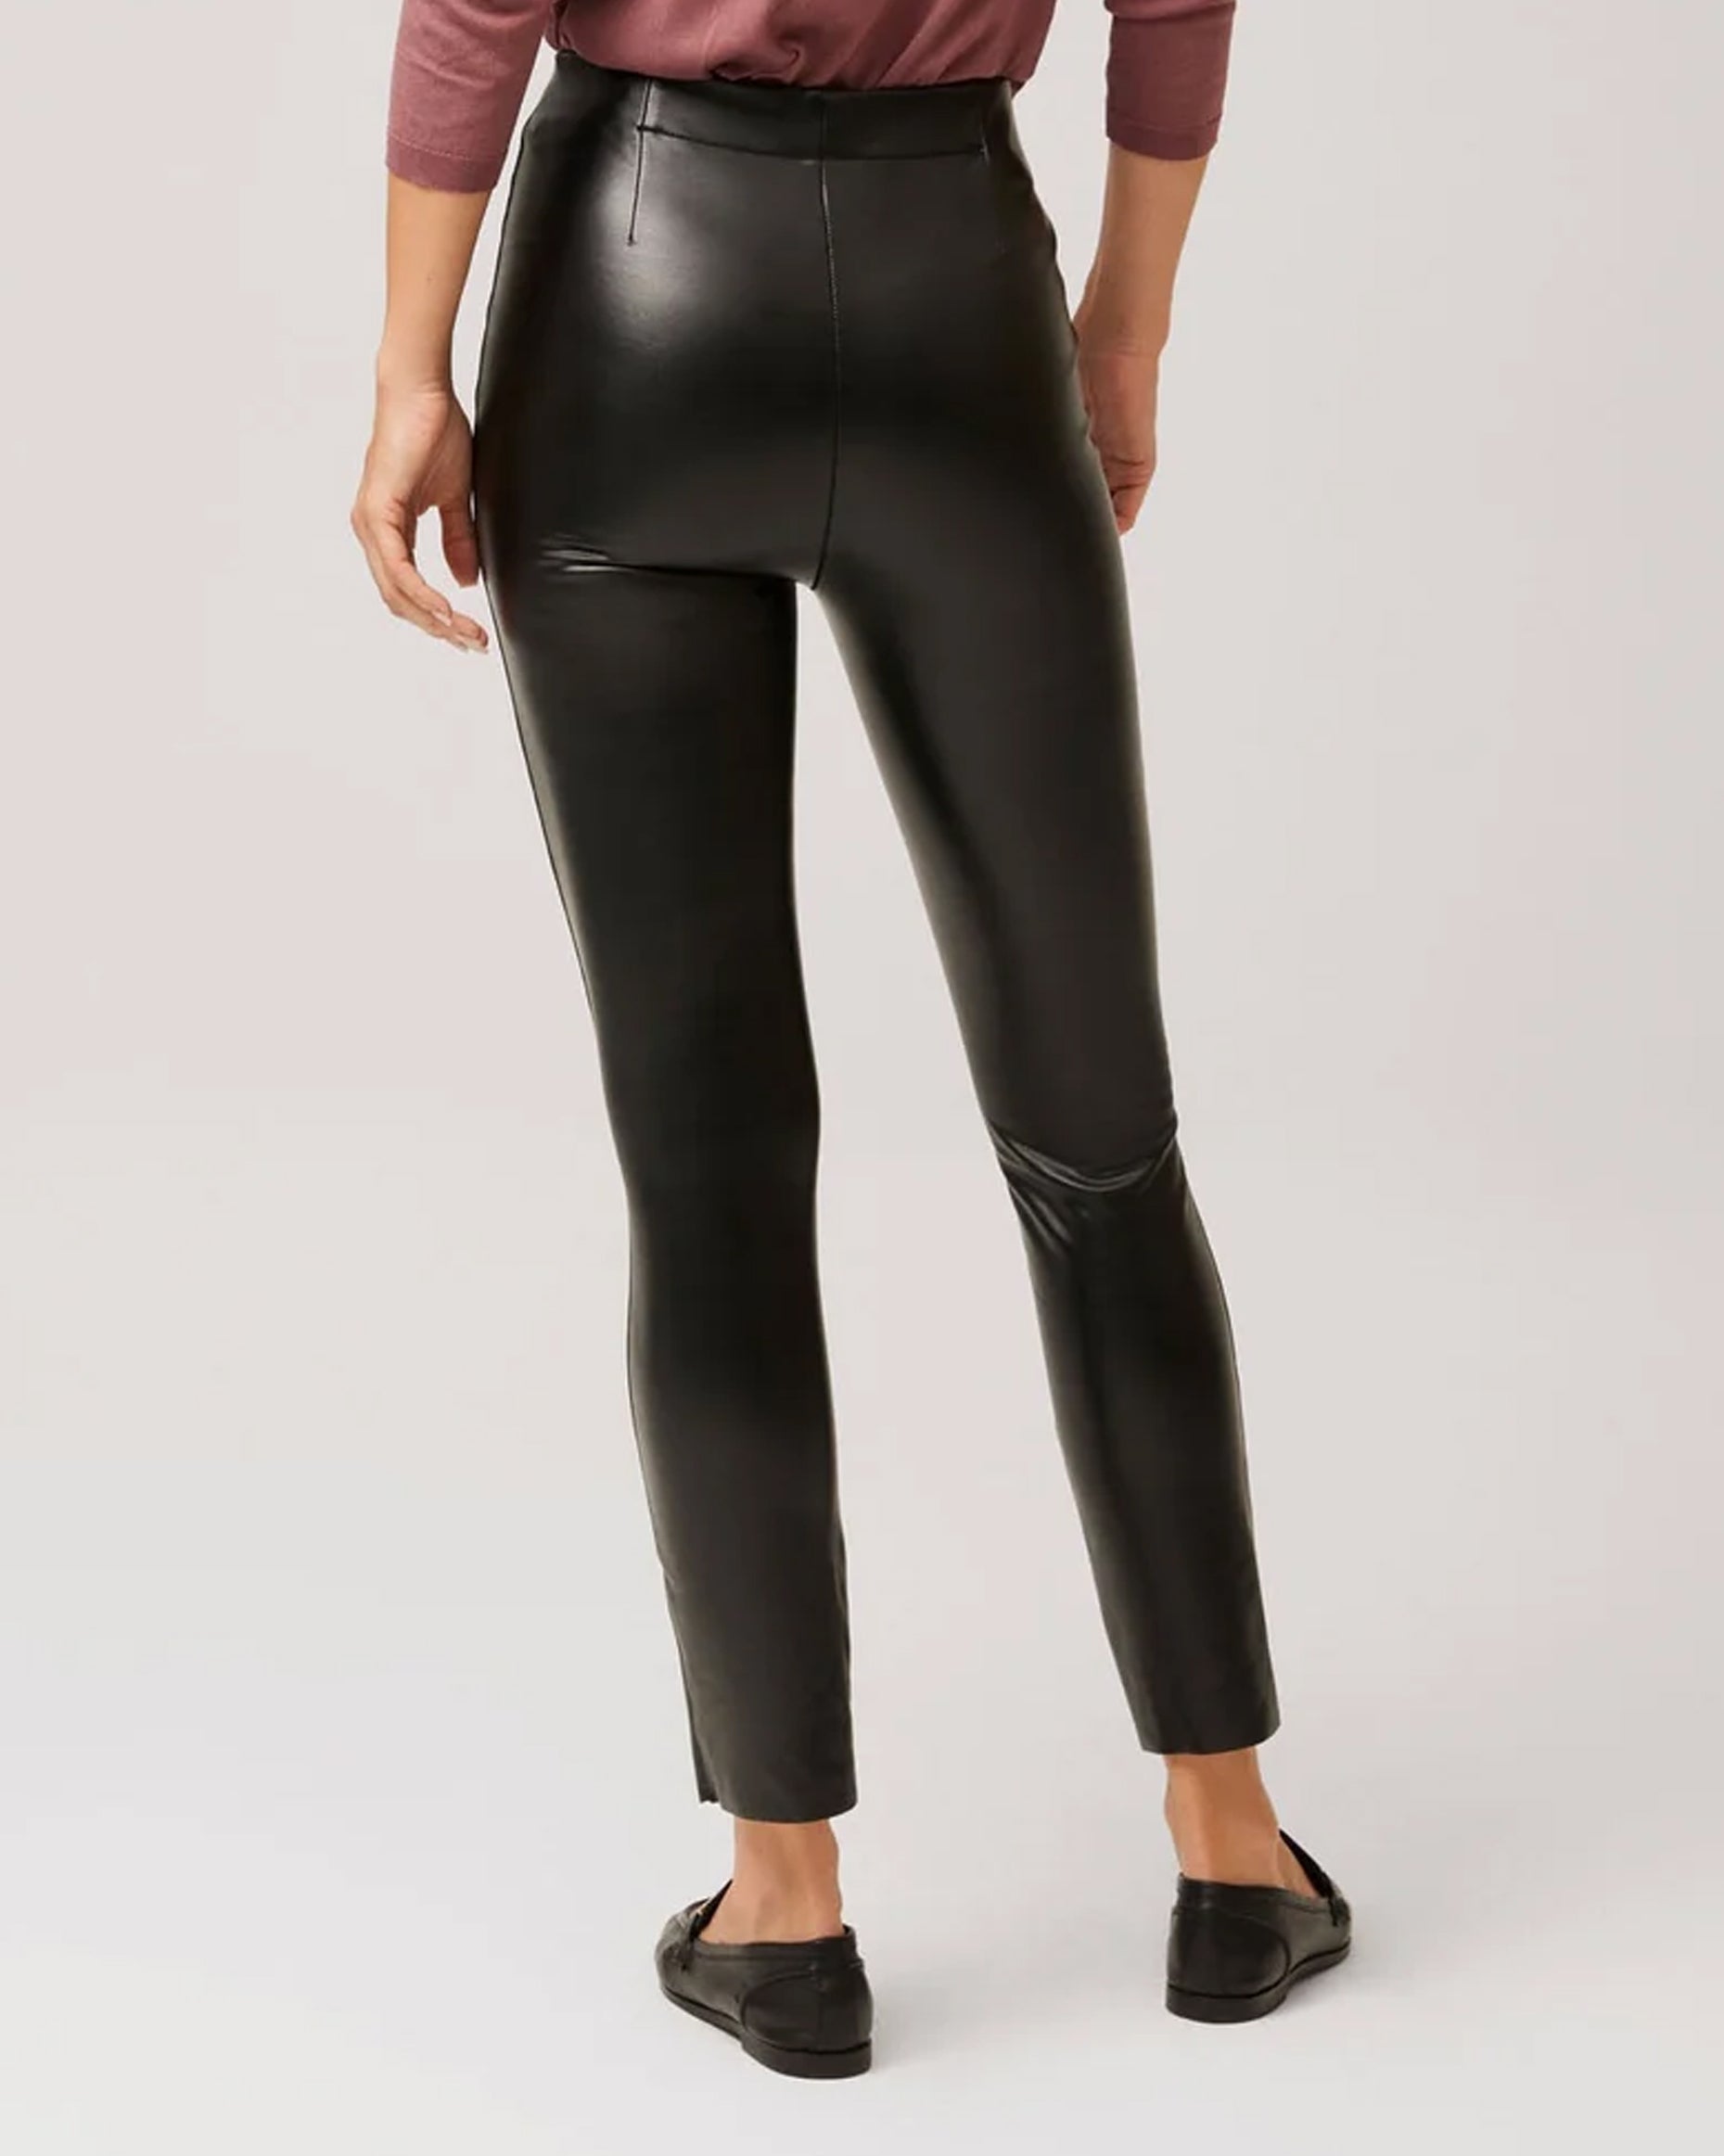 Ysabel Mora 70295 Faux Leather Slit Leggings - Tight fit faux leather thermal black coloured leggings. 